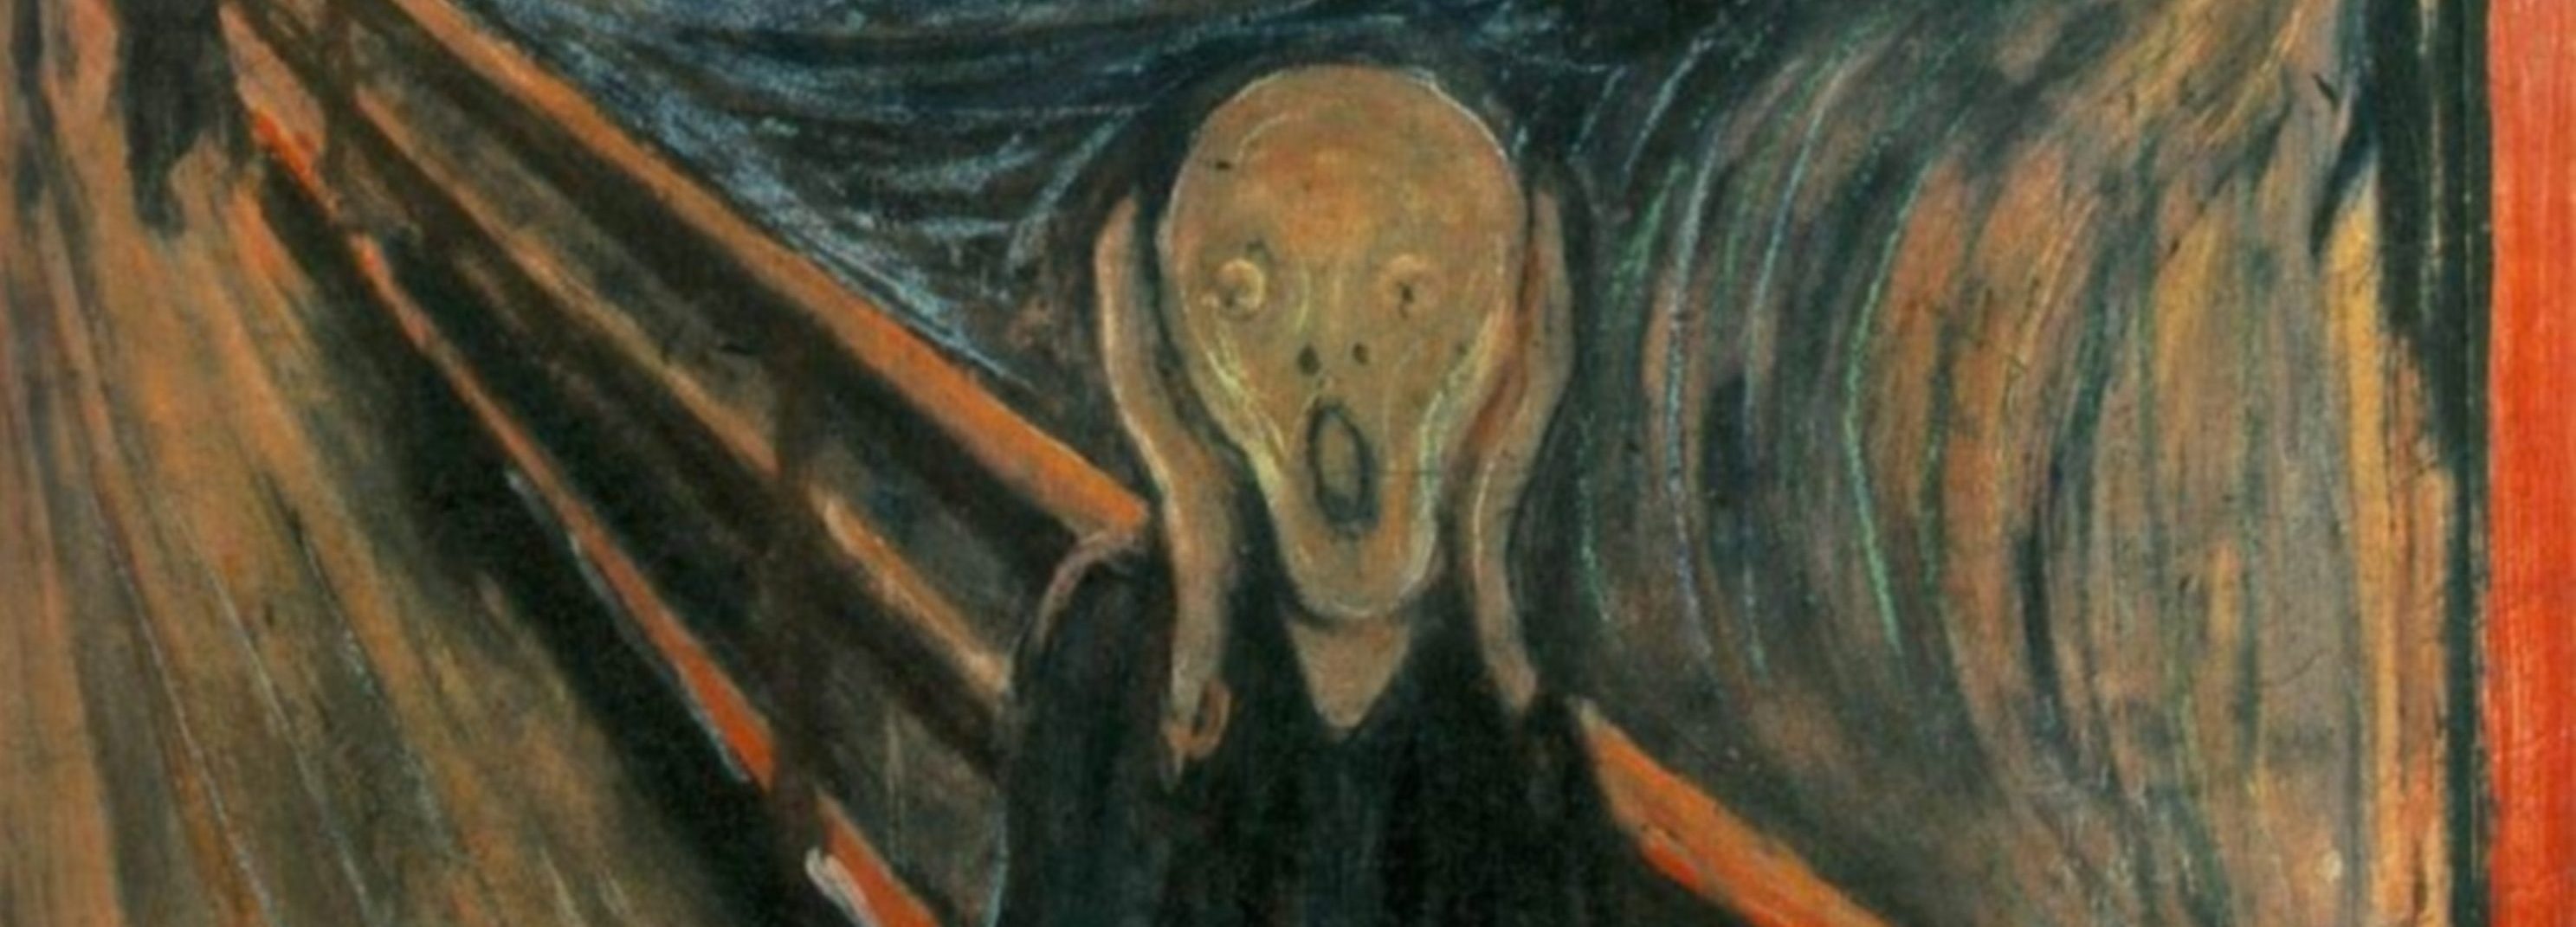 Detail from Edvard Munch, "The Scream." 1893.